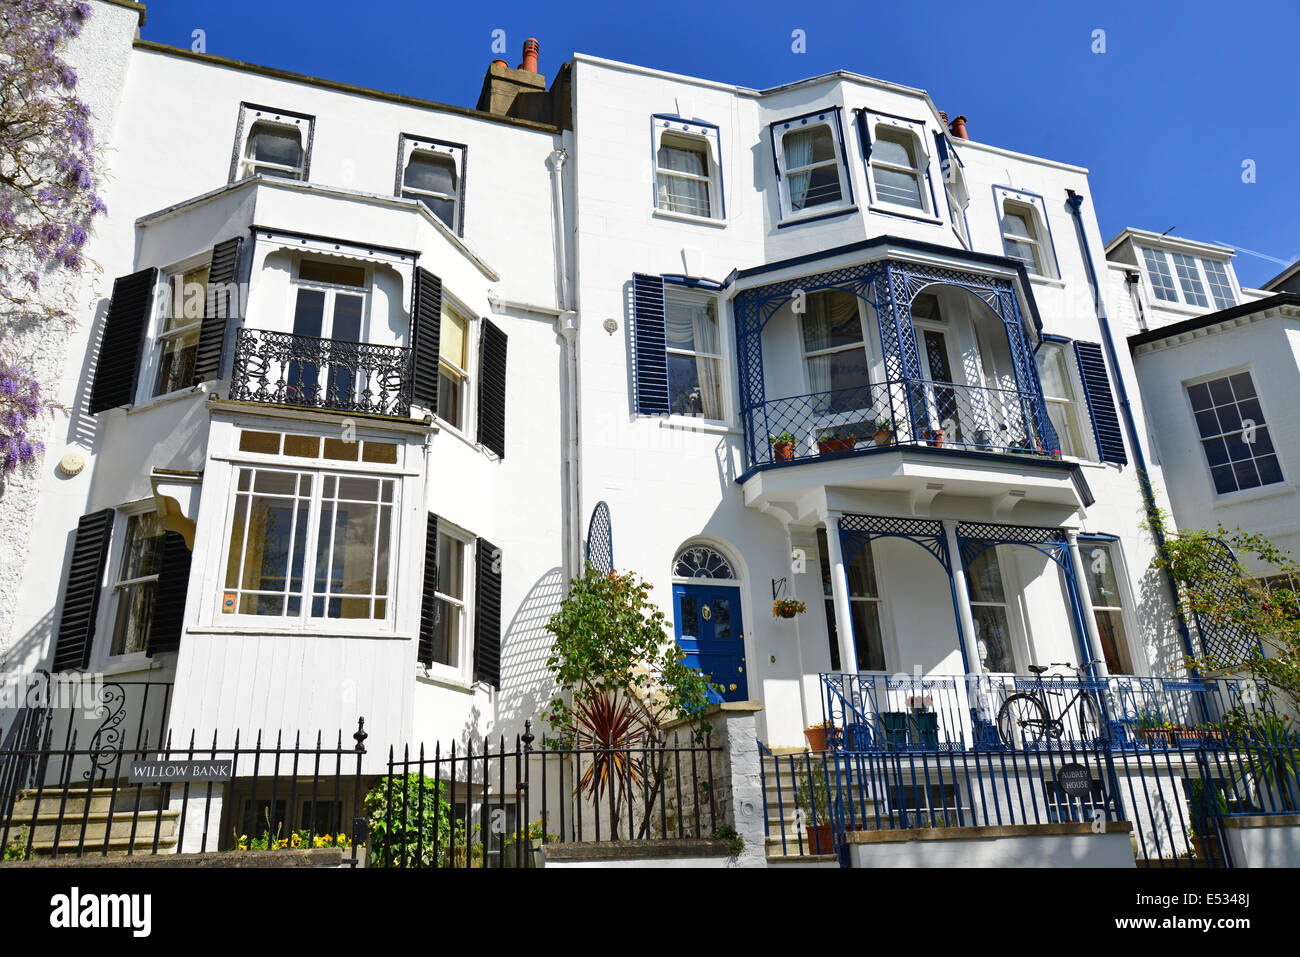 Period houses, Riverside, Twickenham, London Borough of Richmond upon Thames, Greater London, England, United Kingdom Stock Photo